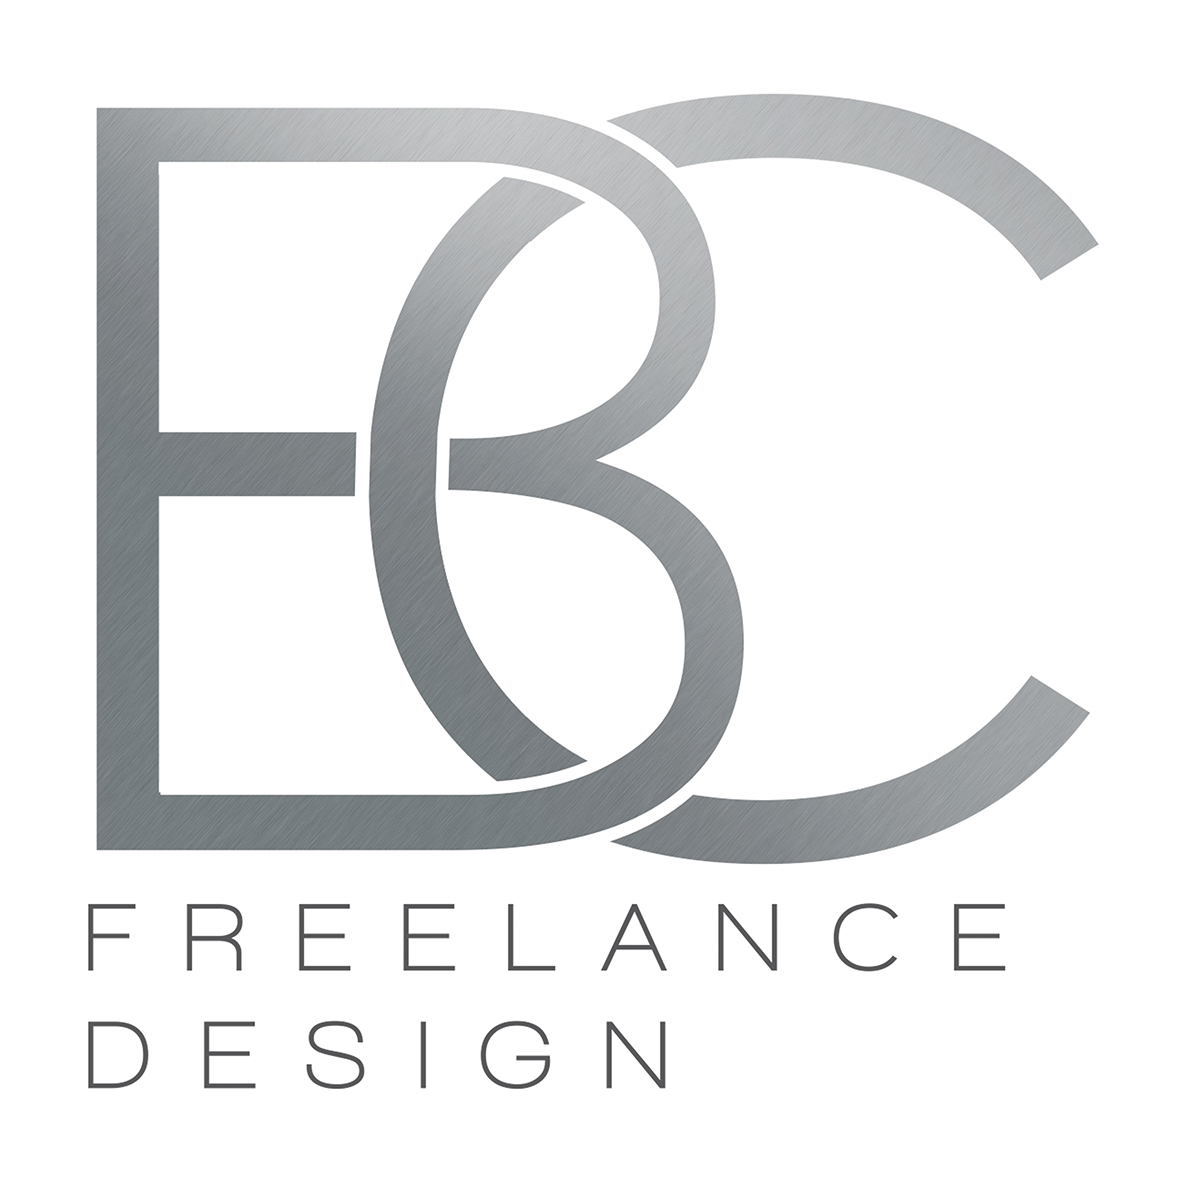 BC freelance design - Lennox Head Accommodation